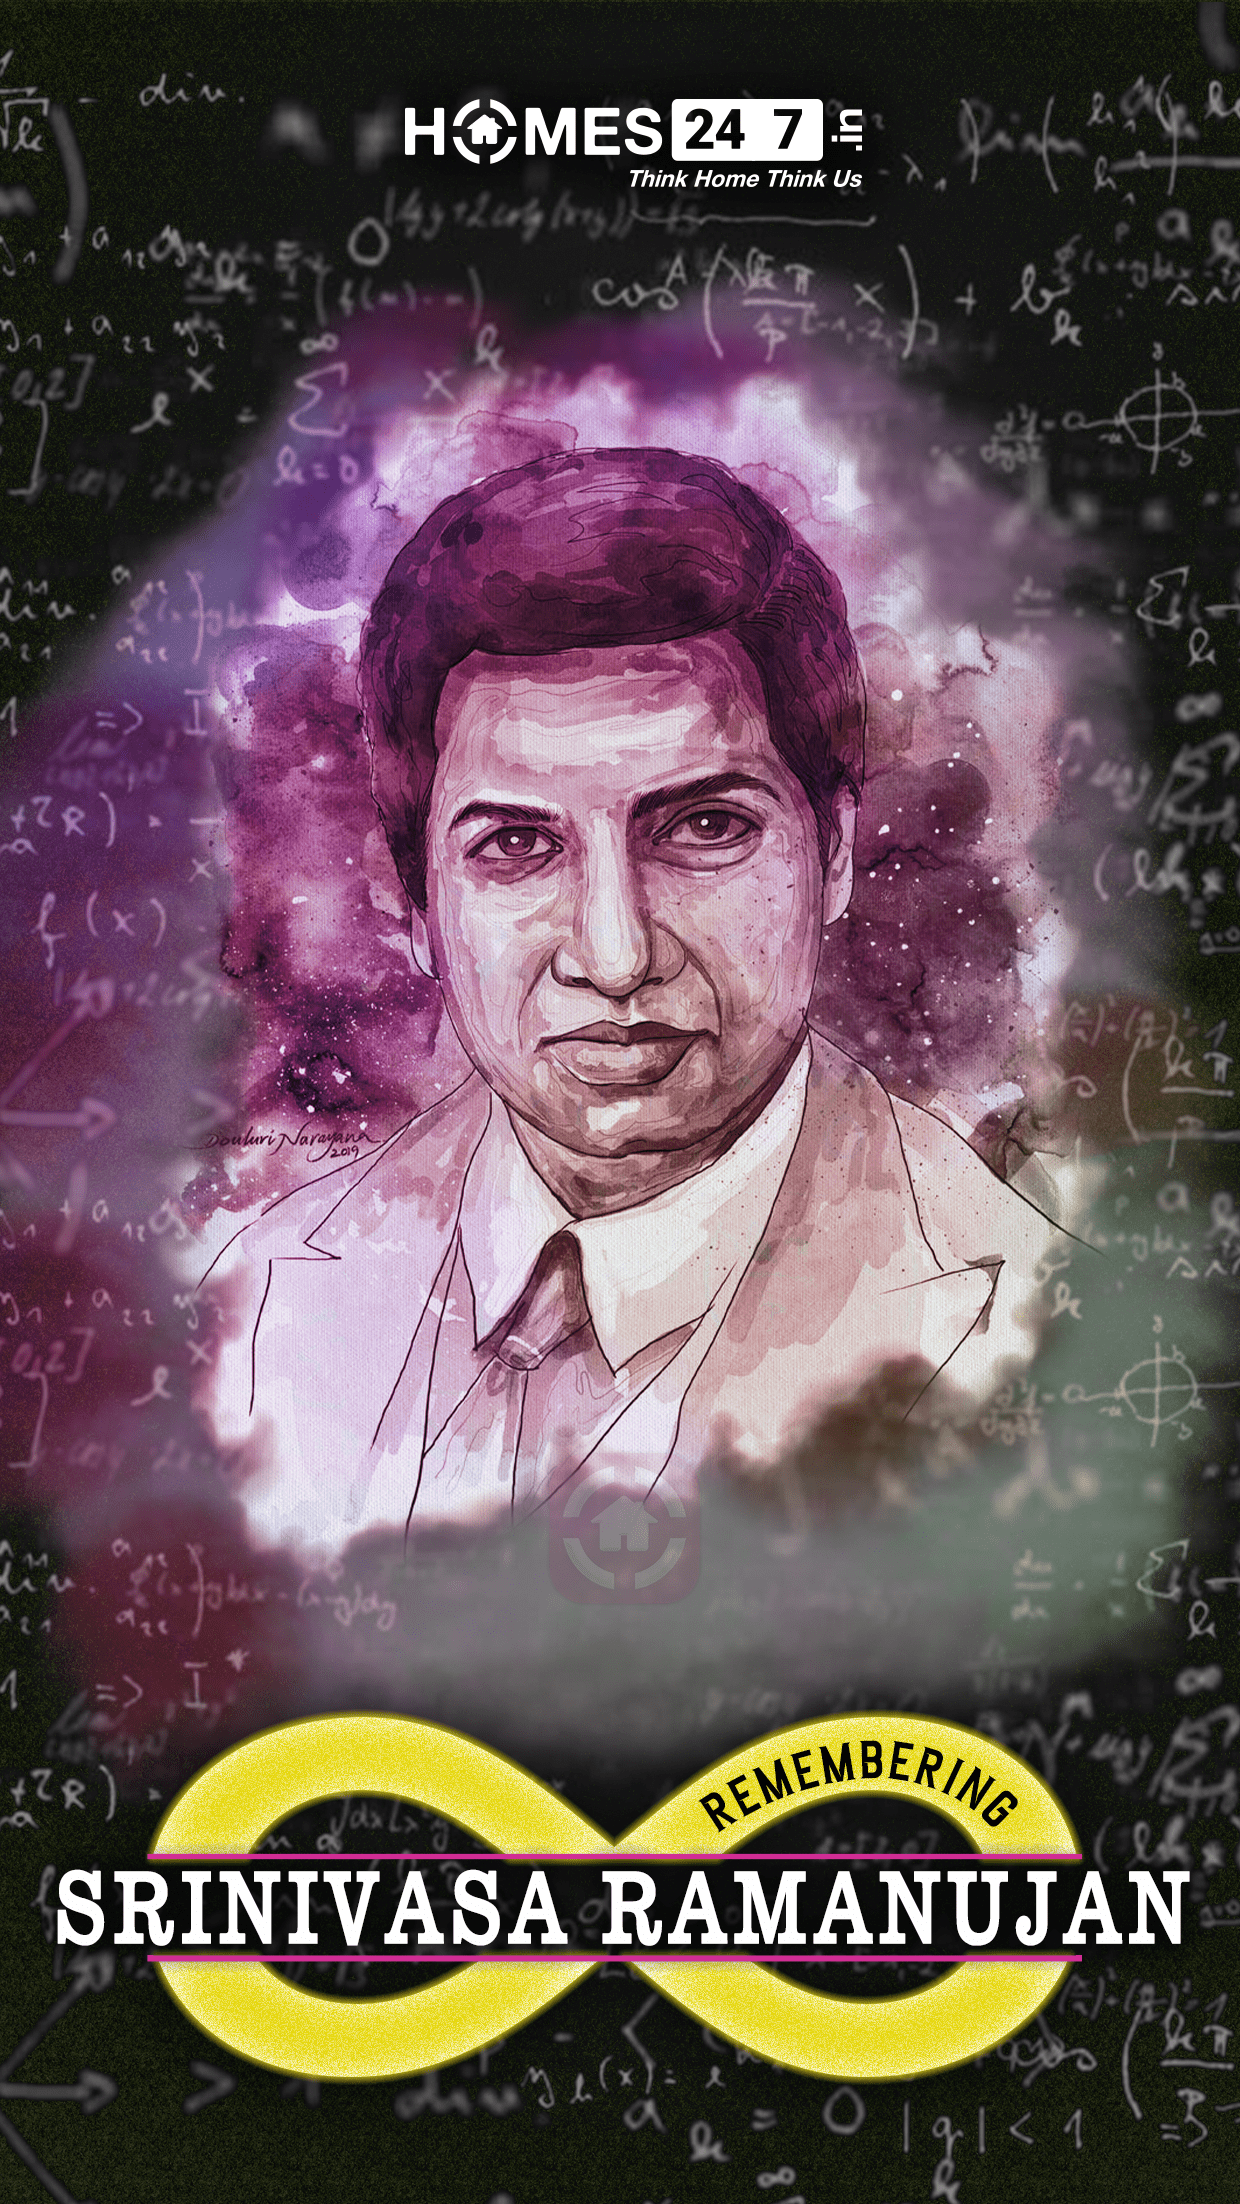 Srinivasa Ramanujan | National Mathematics Day - India